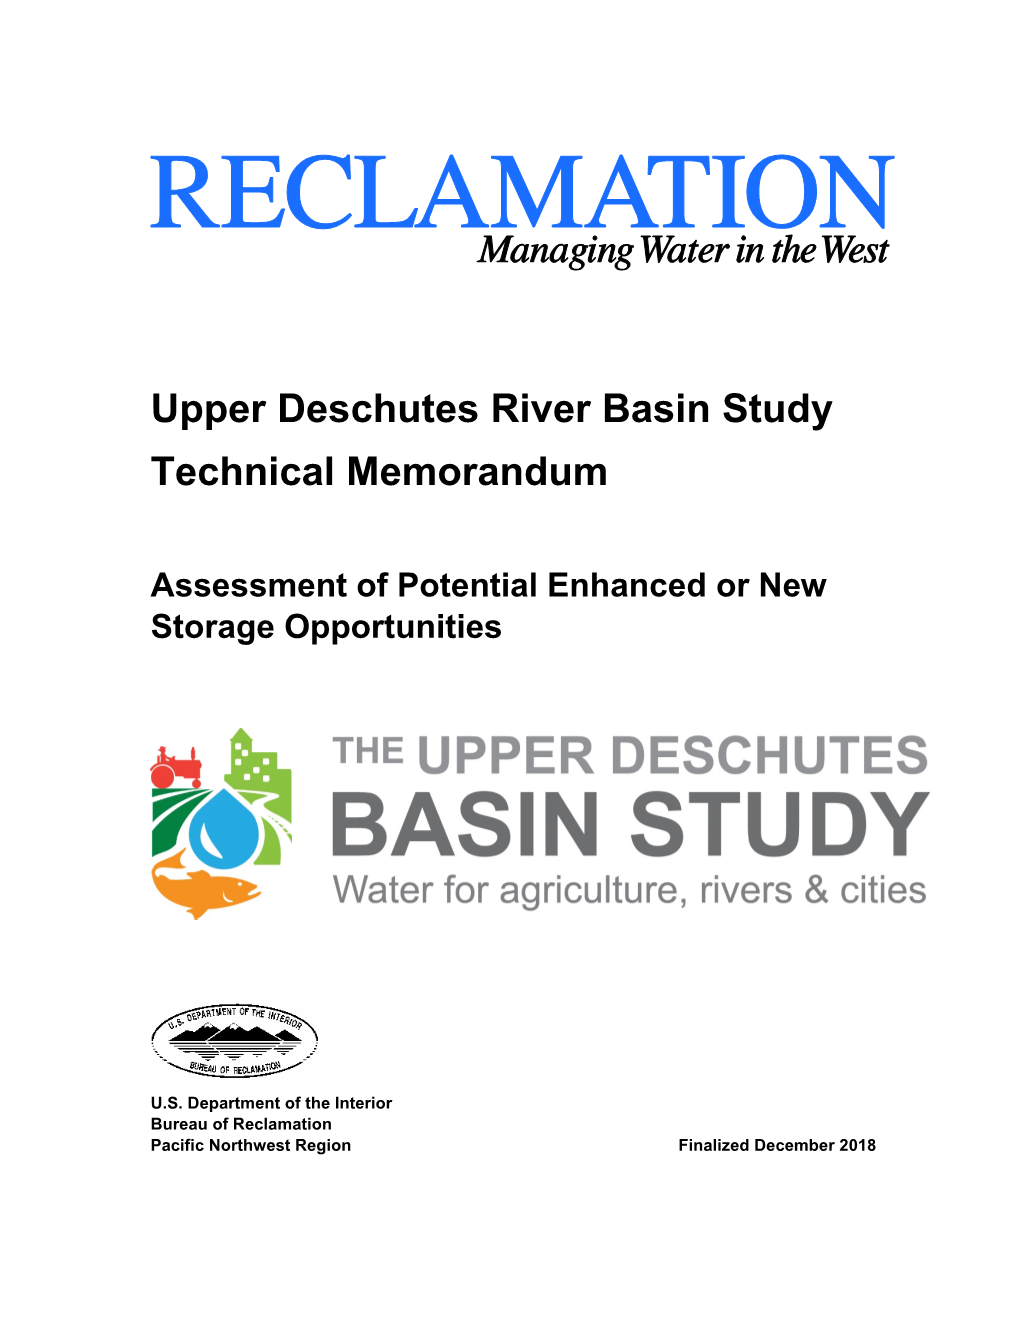 Upper Deschutes River Basin Study Technical Memorandum